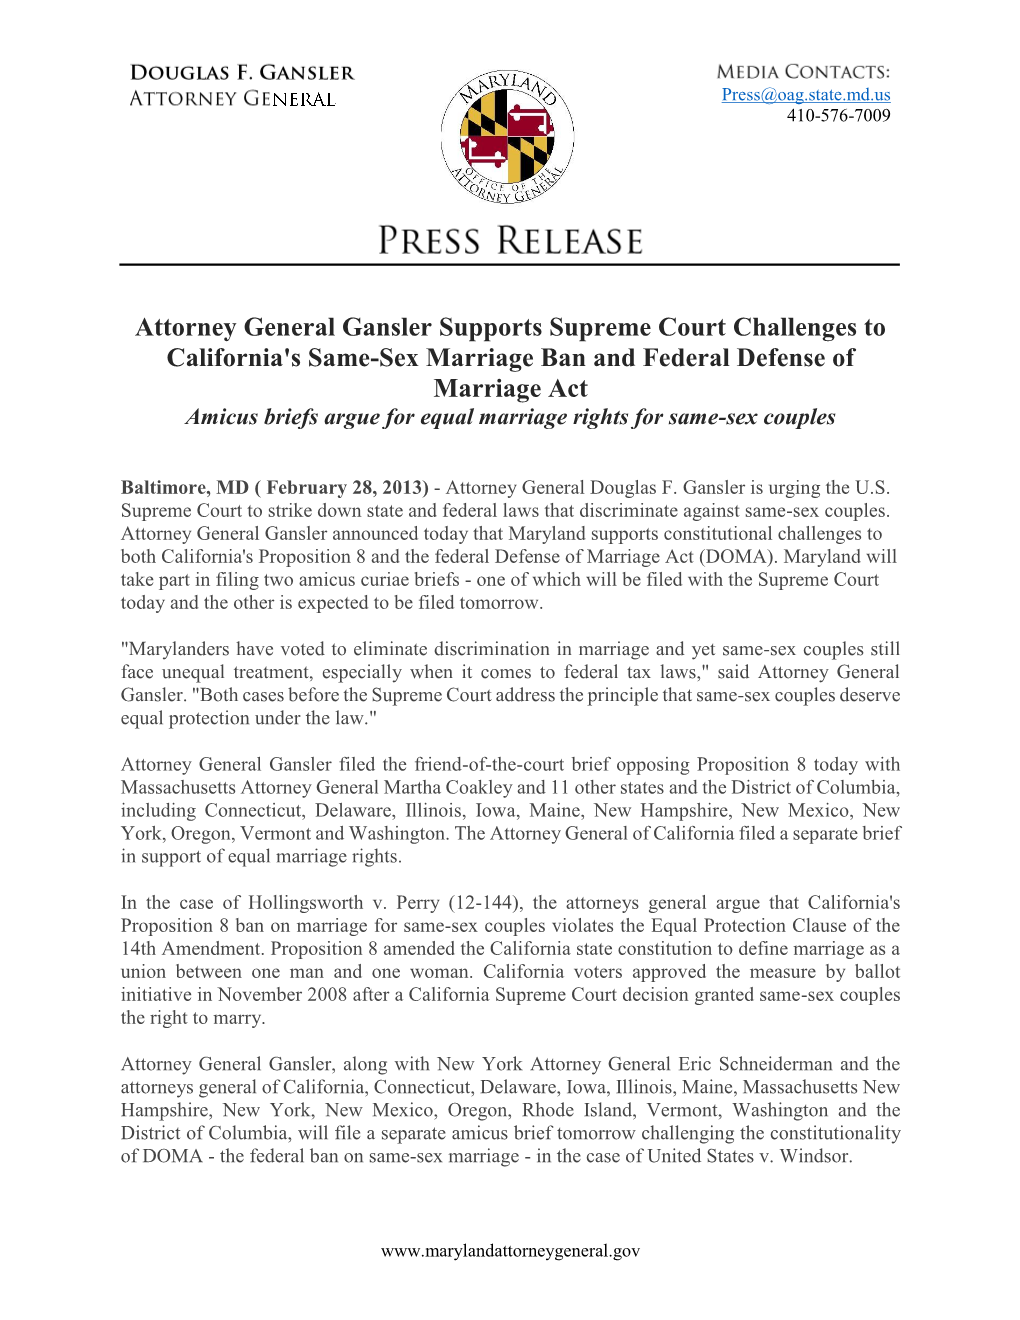 Attorney General Gansler Supports Supreme Court Challenges To